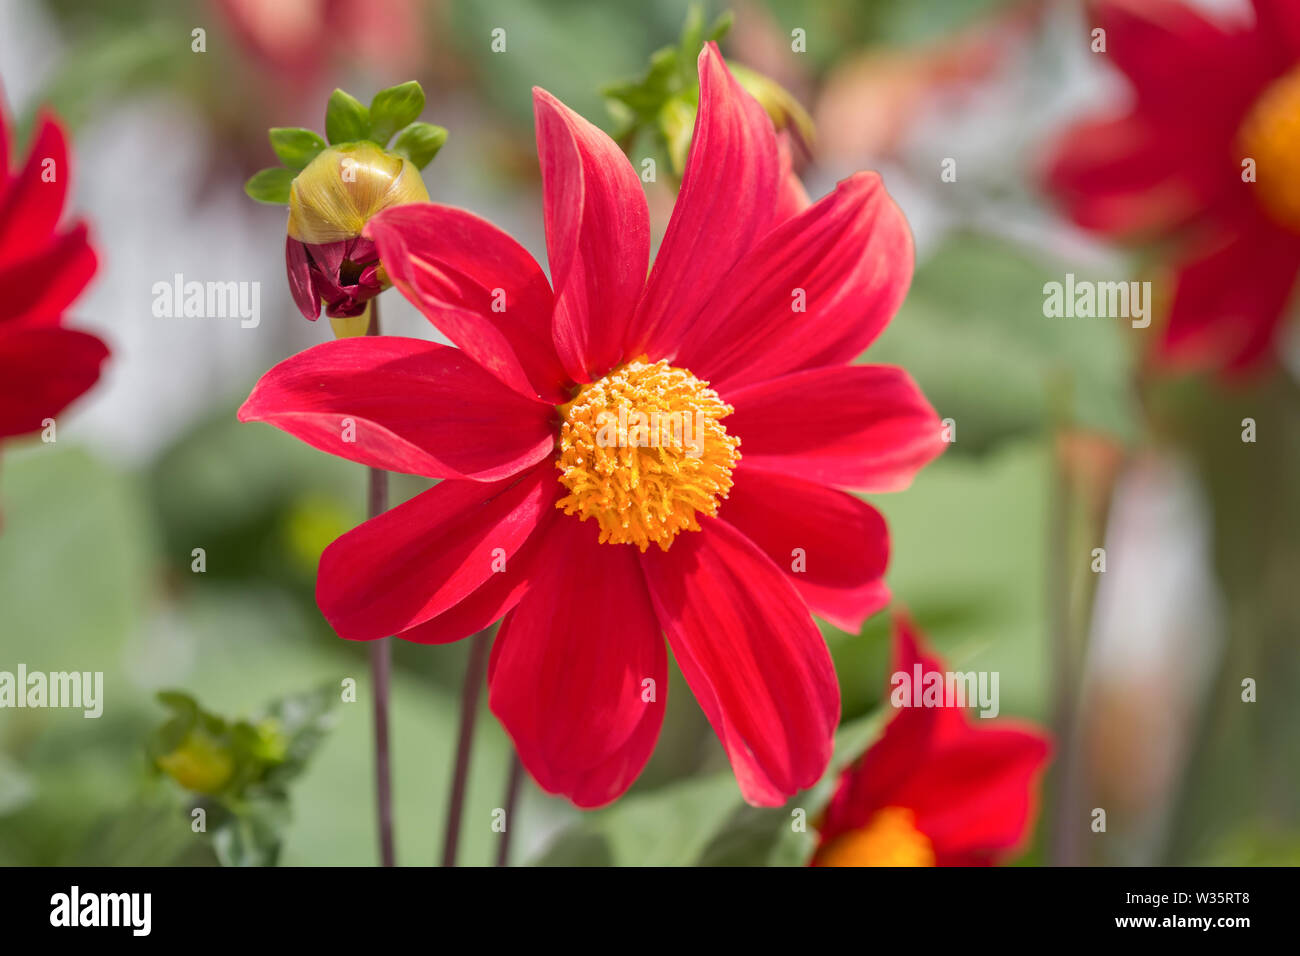 Red Dahlia flower in a garden. Stock Photo